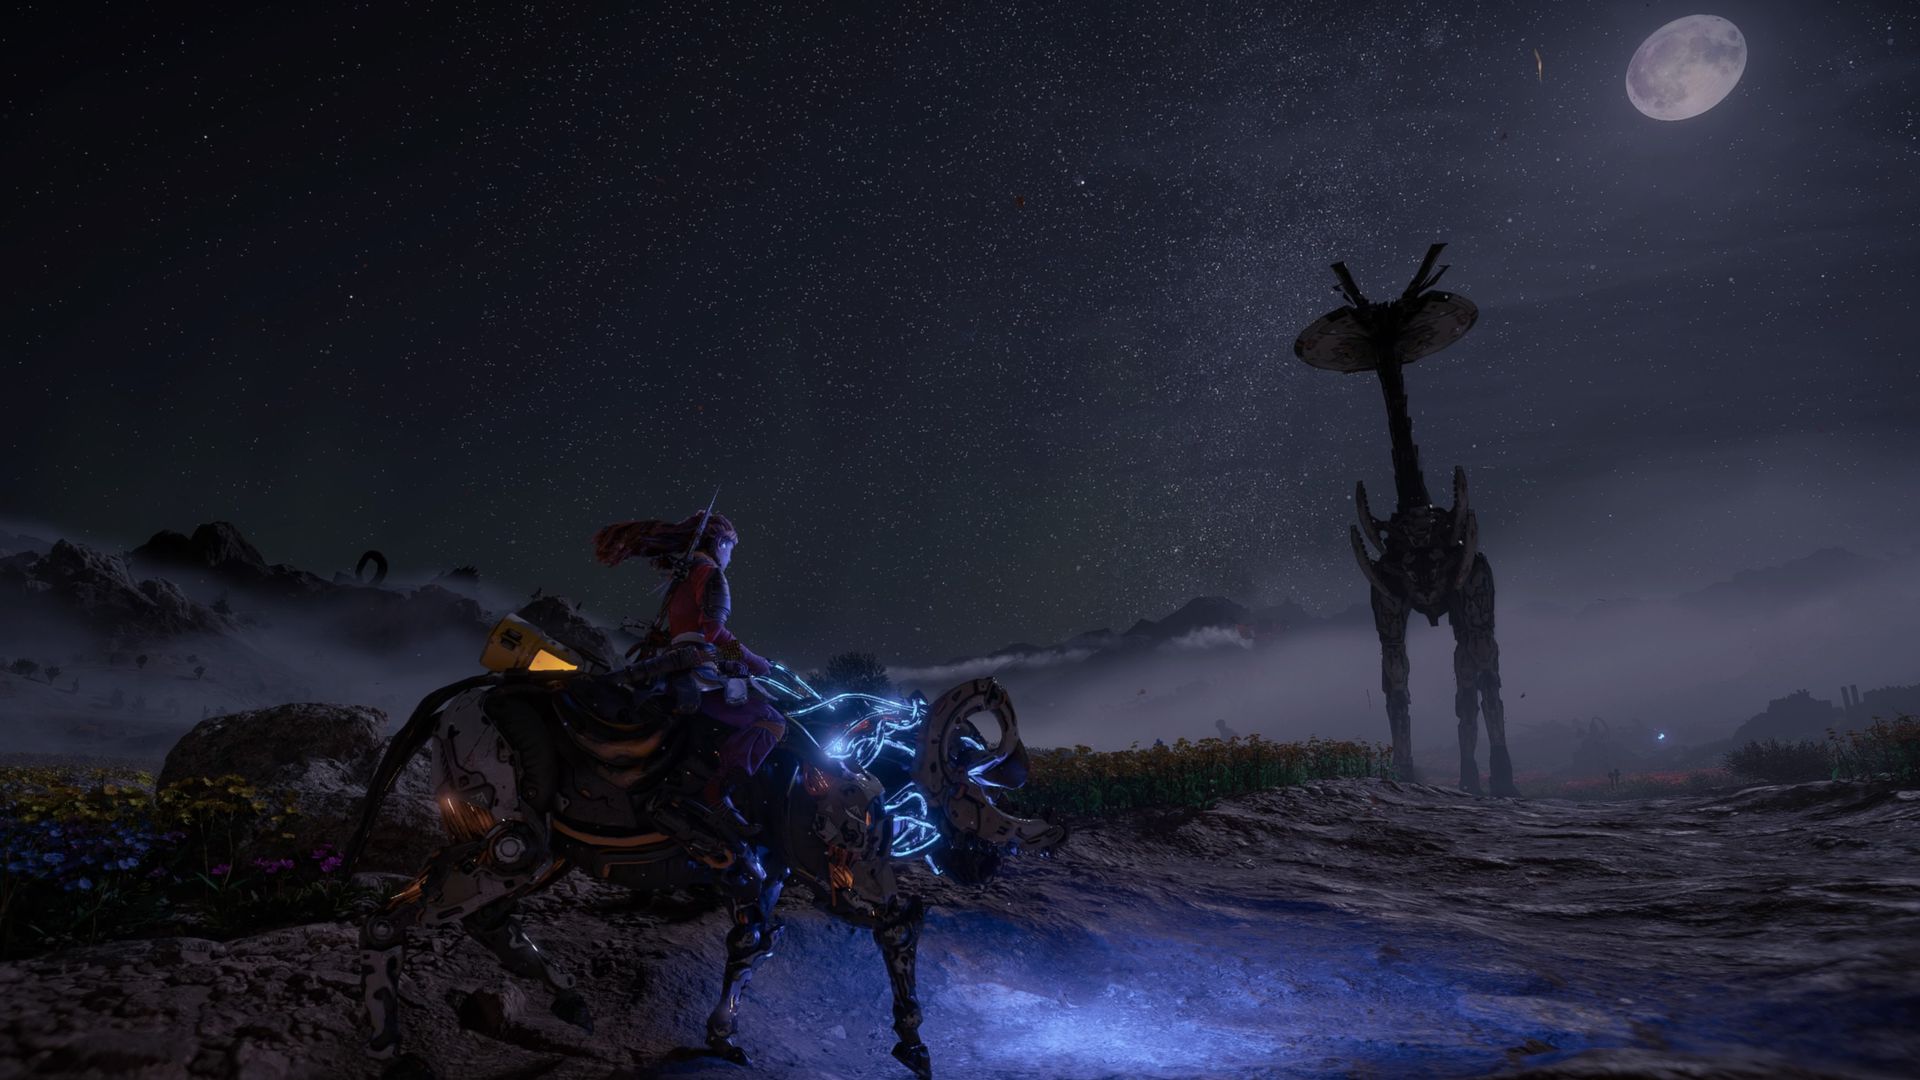 Video game screenshot of a woman riding a mechanical horse at night, approaching a tall giraffe-like robot